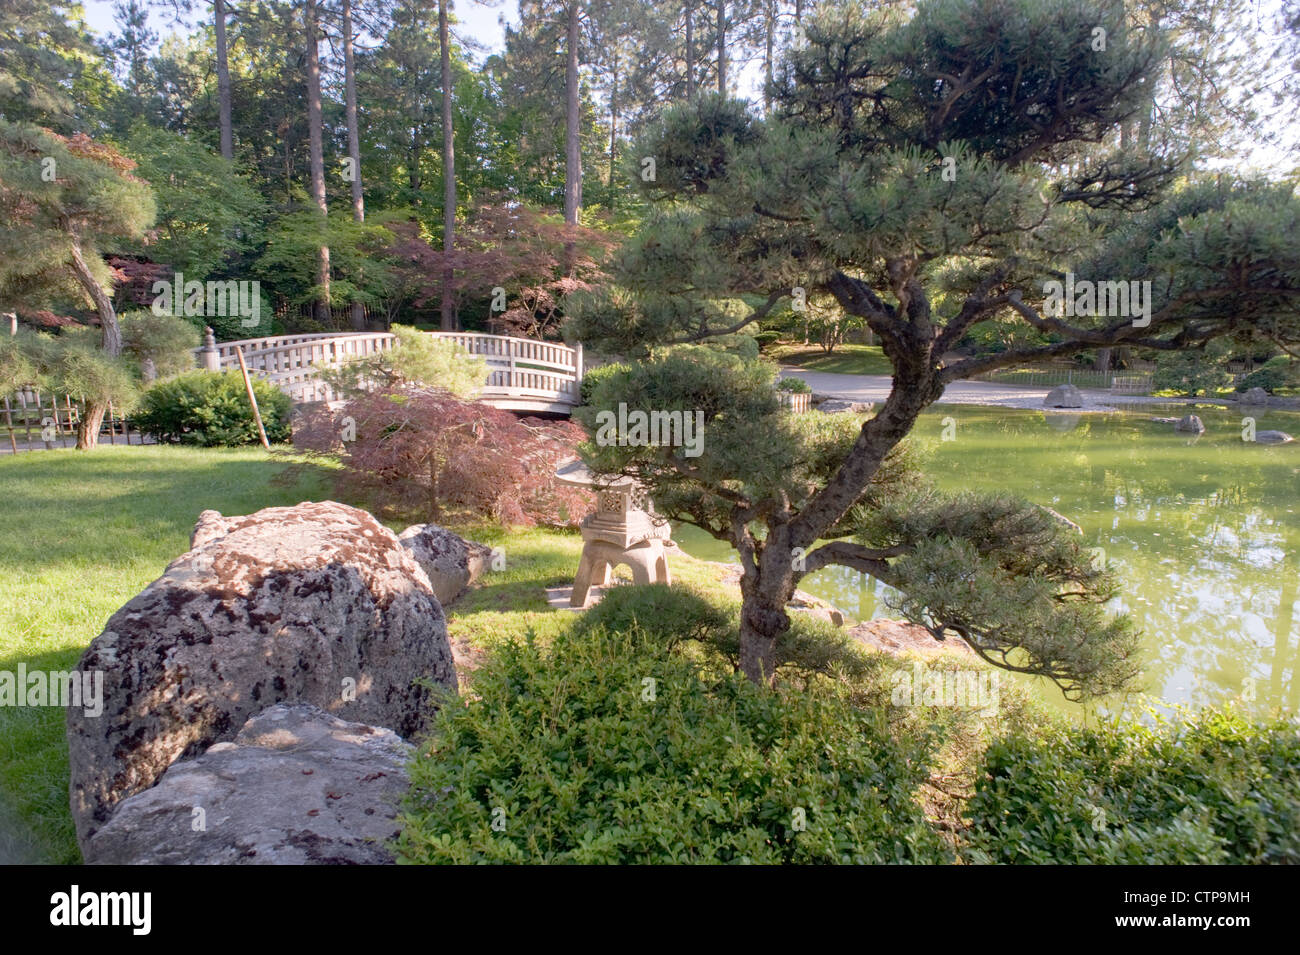 The Restful Nishinomiya Japanese Garden At Manito Park And